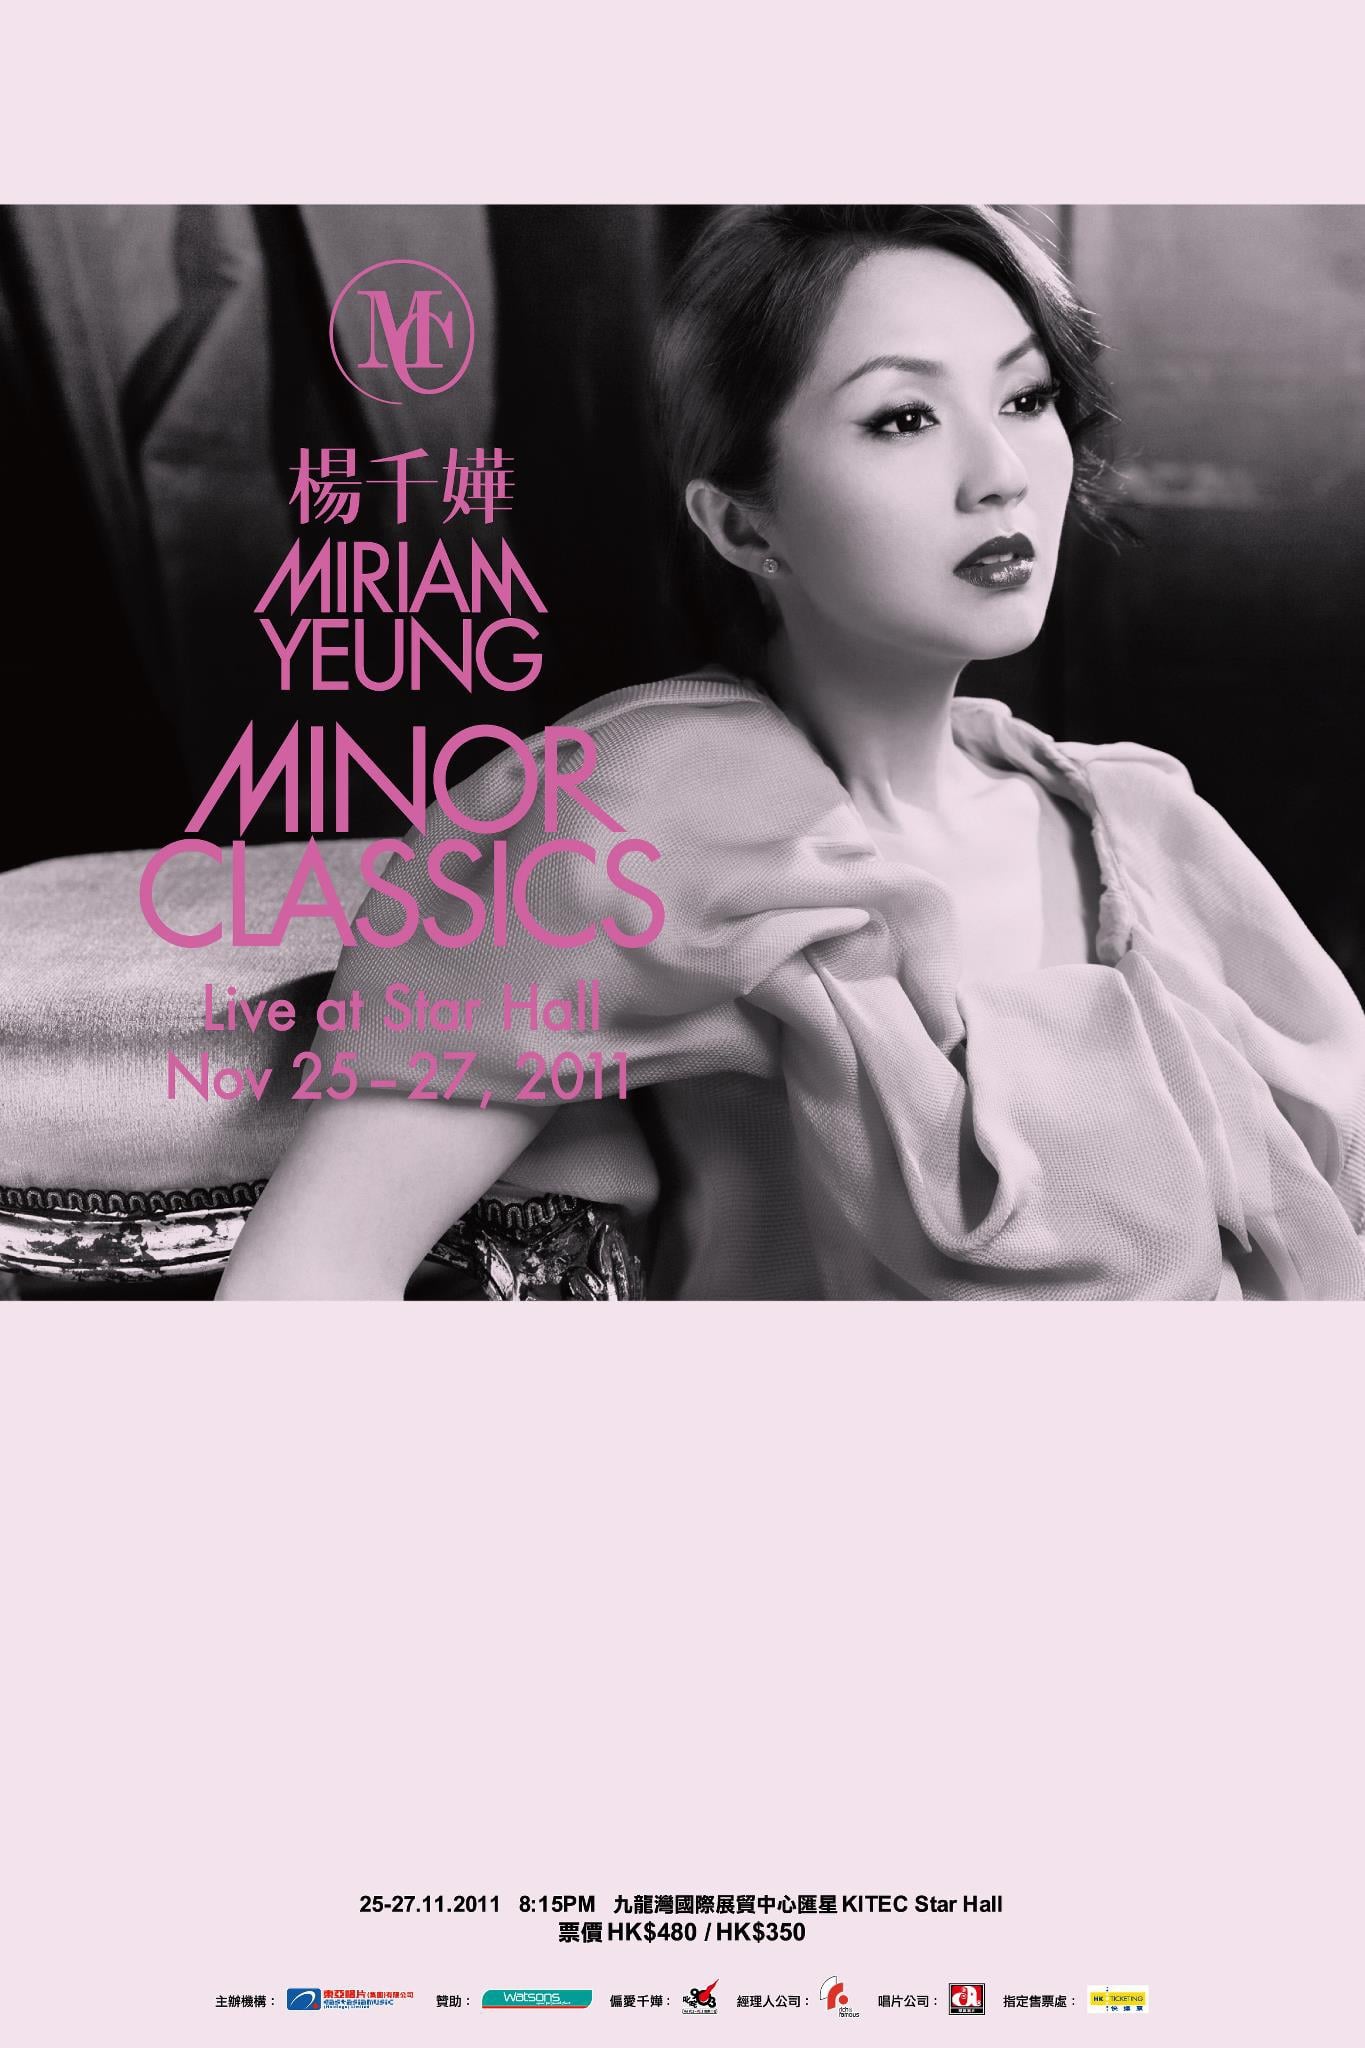 Miriam Yeung Minor Classics Live